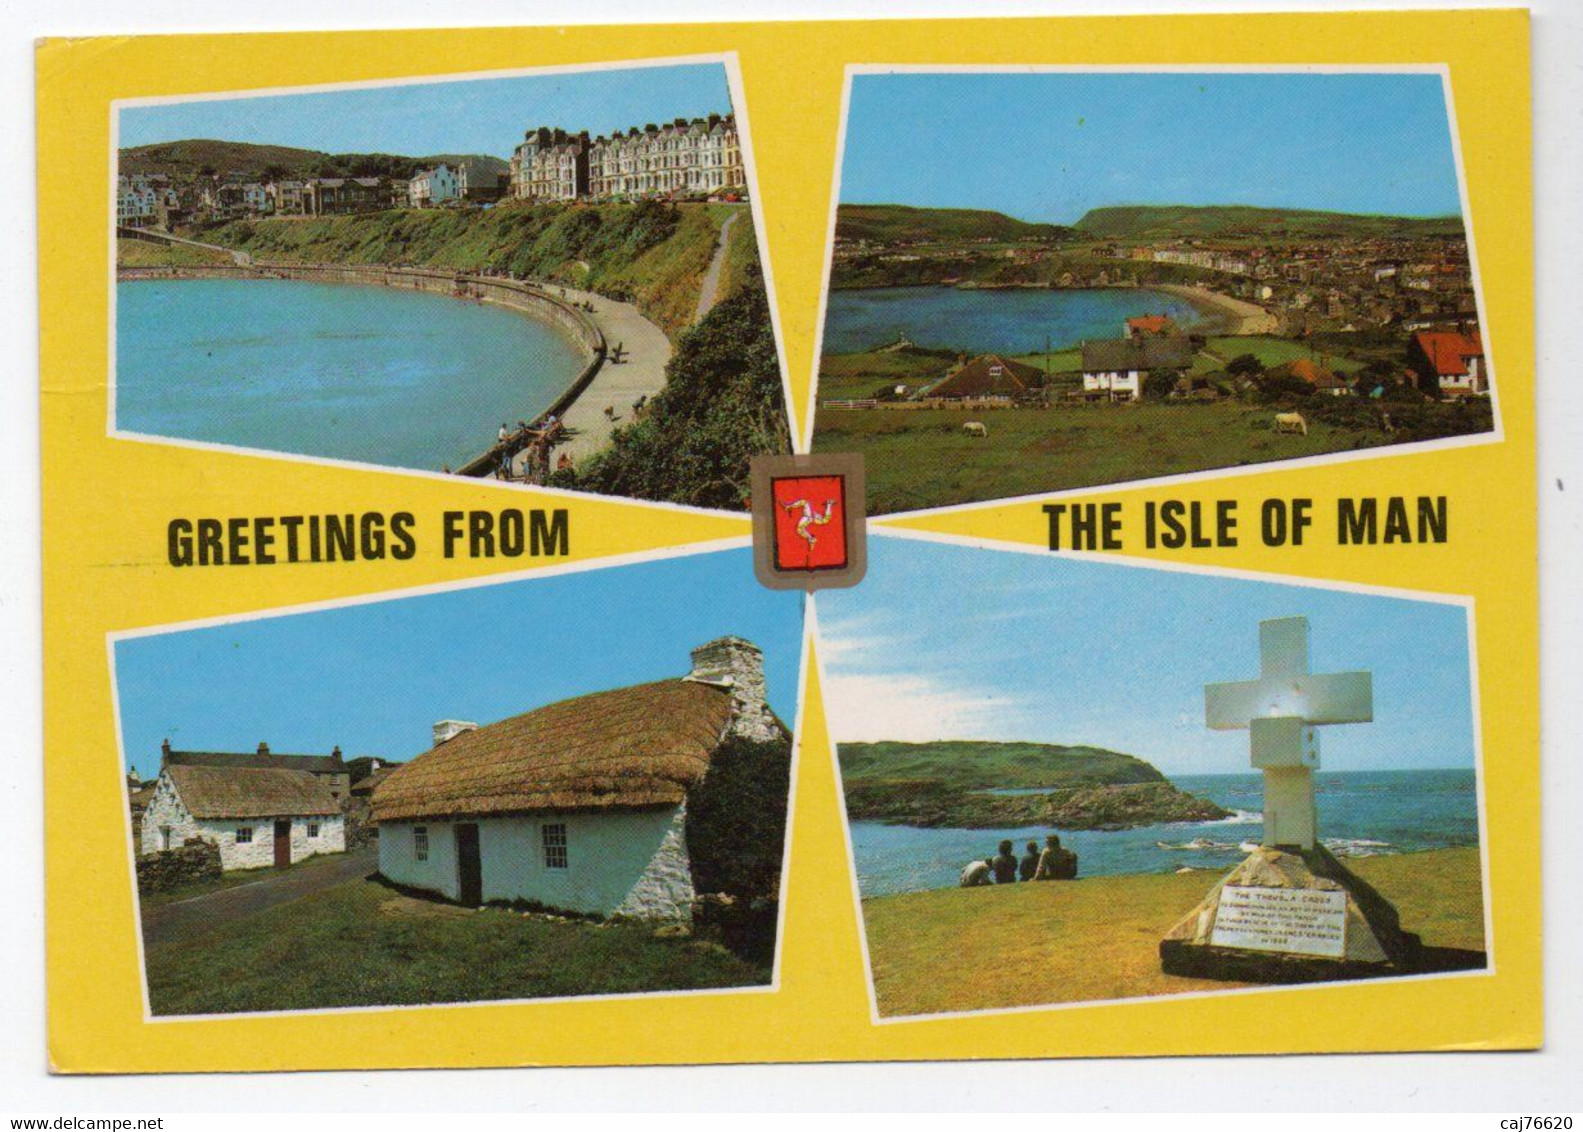 Graetings From The Isle Of Man - Isle Of Man